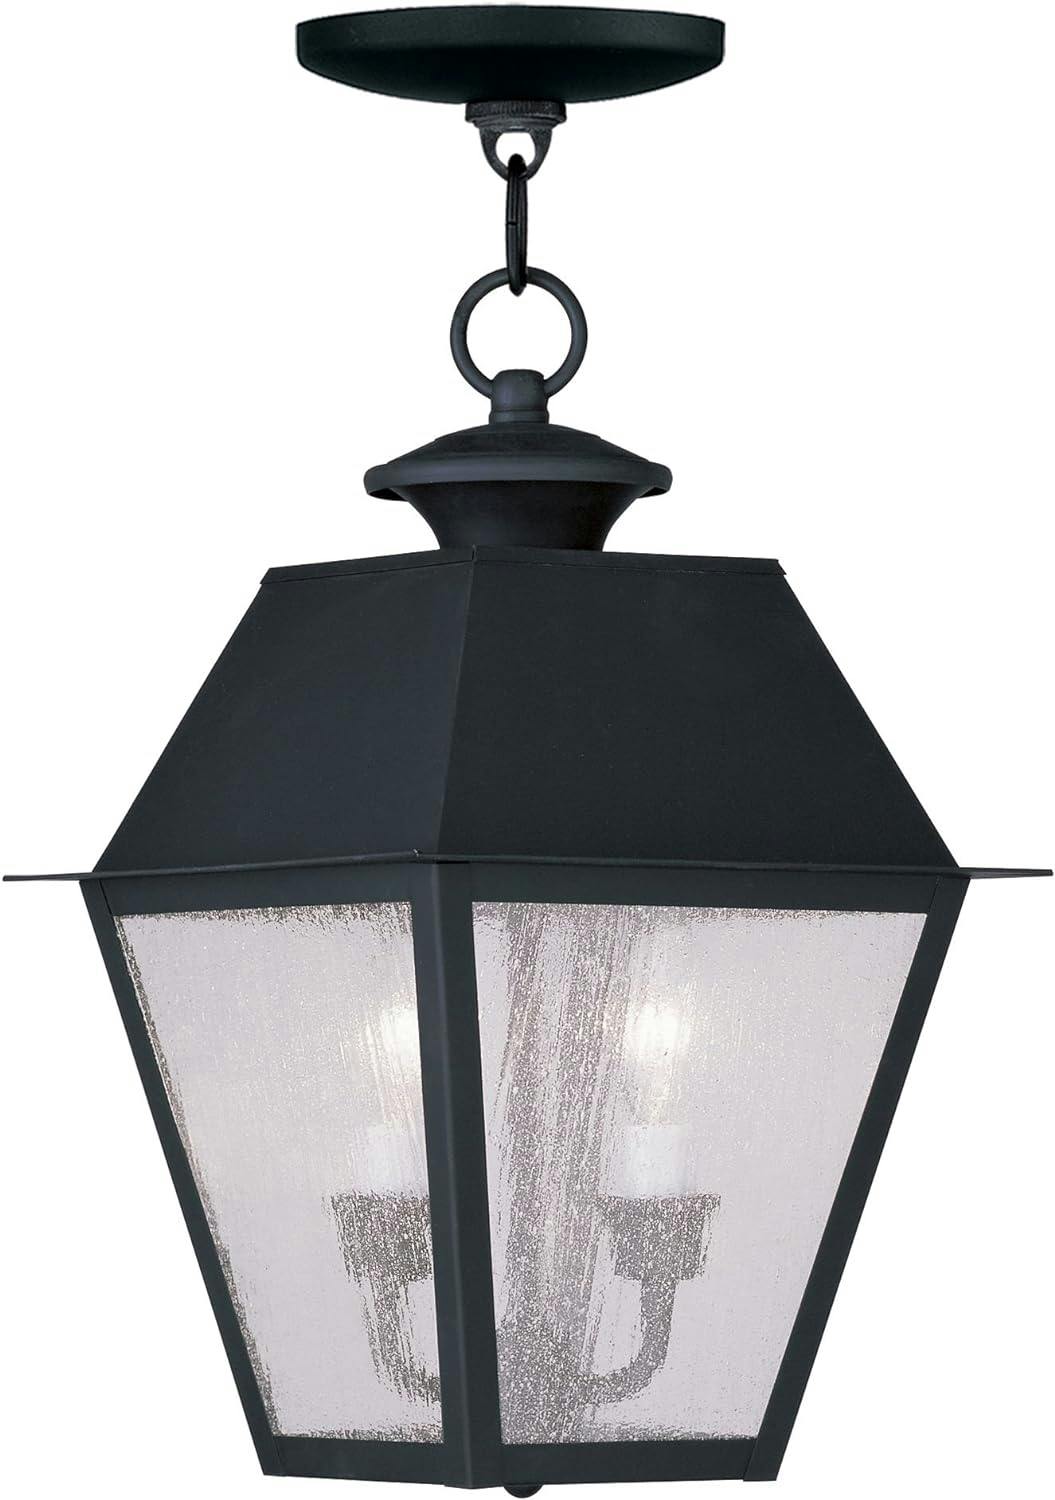 Mansfield Seeded Glass & Bronze 2-Light Outdoor Lantern in Black